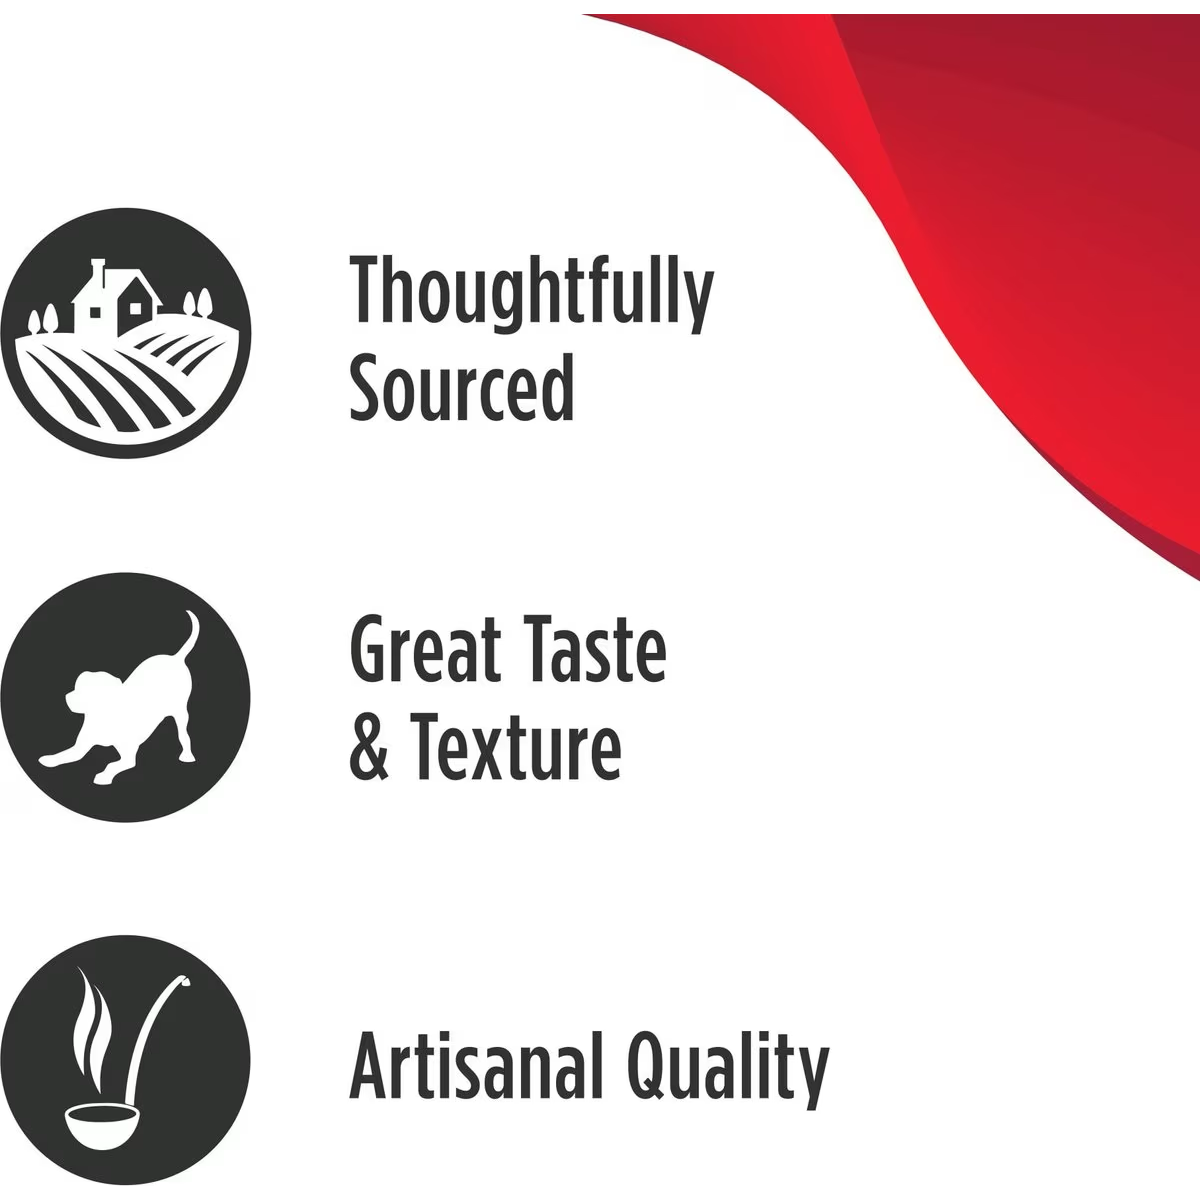 Nulo Freestyle Grain-Free Turkey Recipe with Cranberries Jerky Dog Treats  Dog Treats  | PetMax Canada